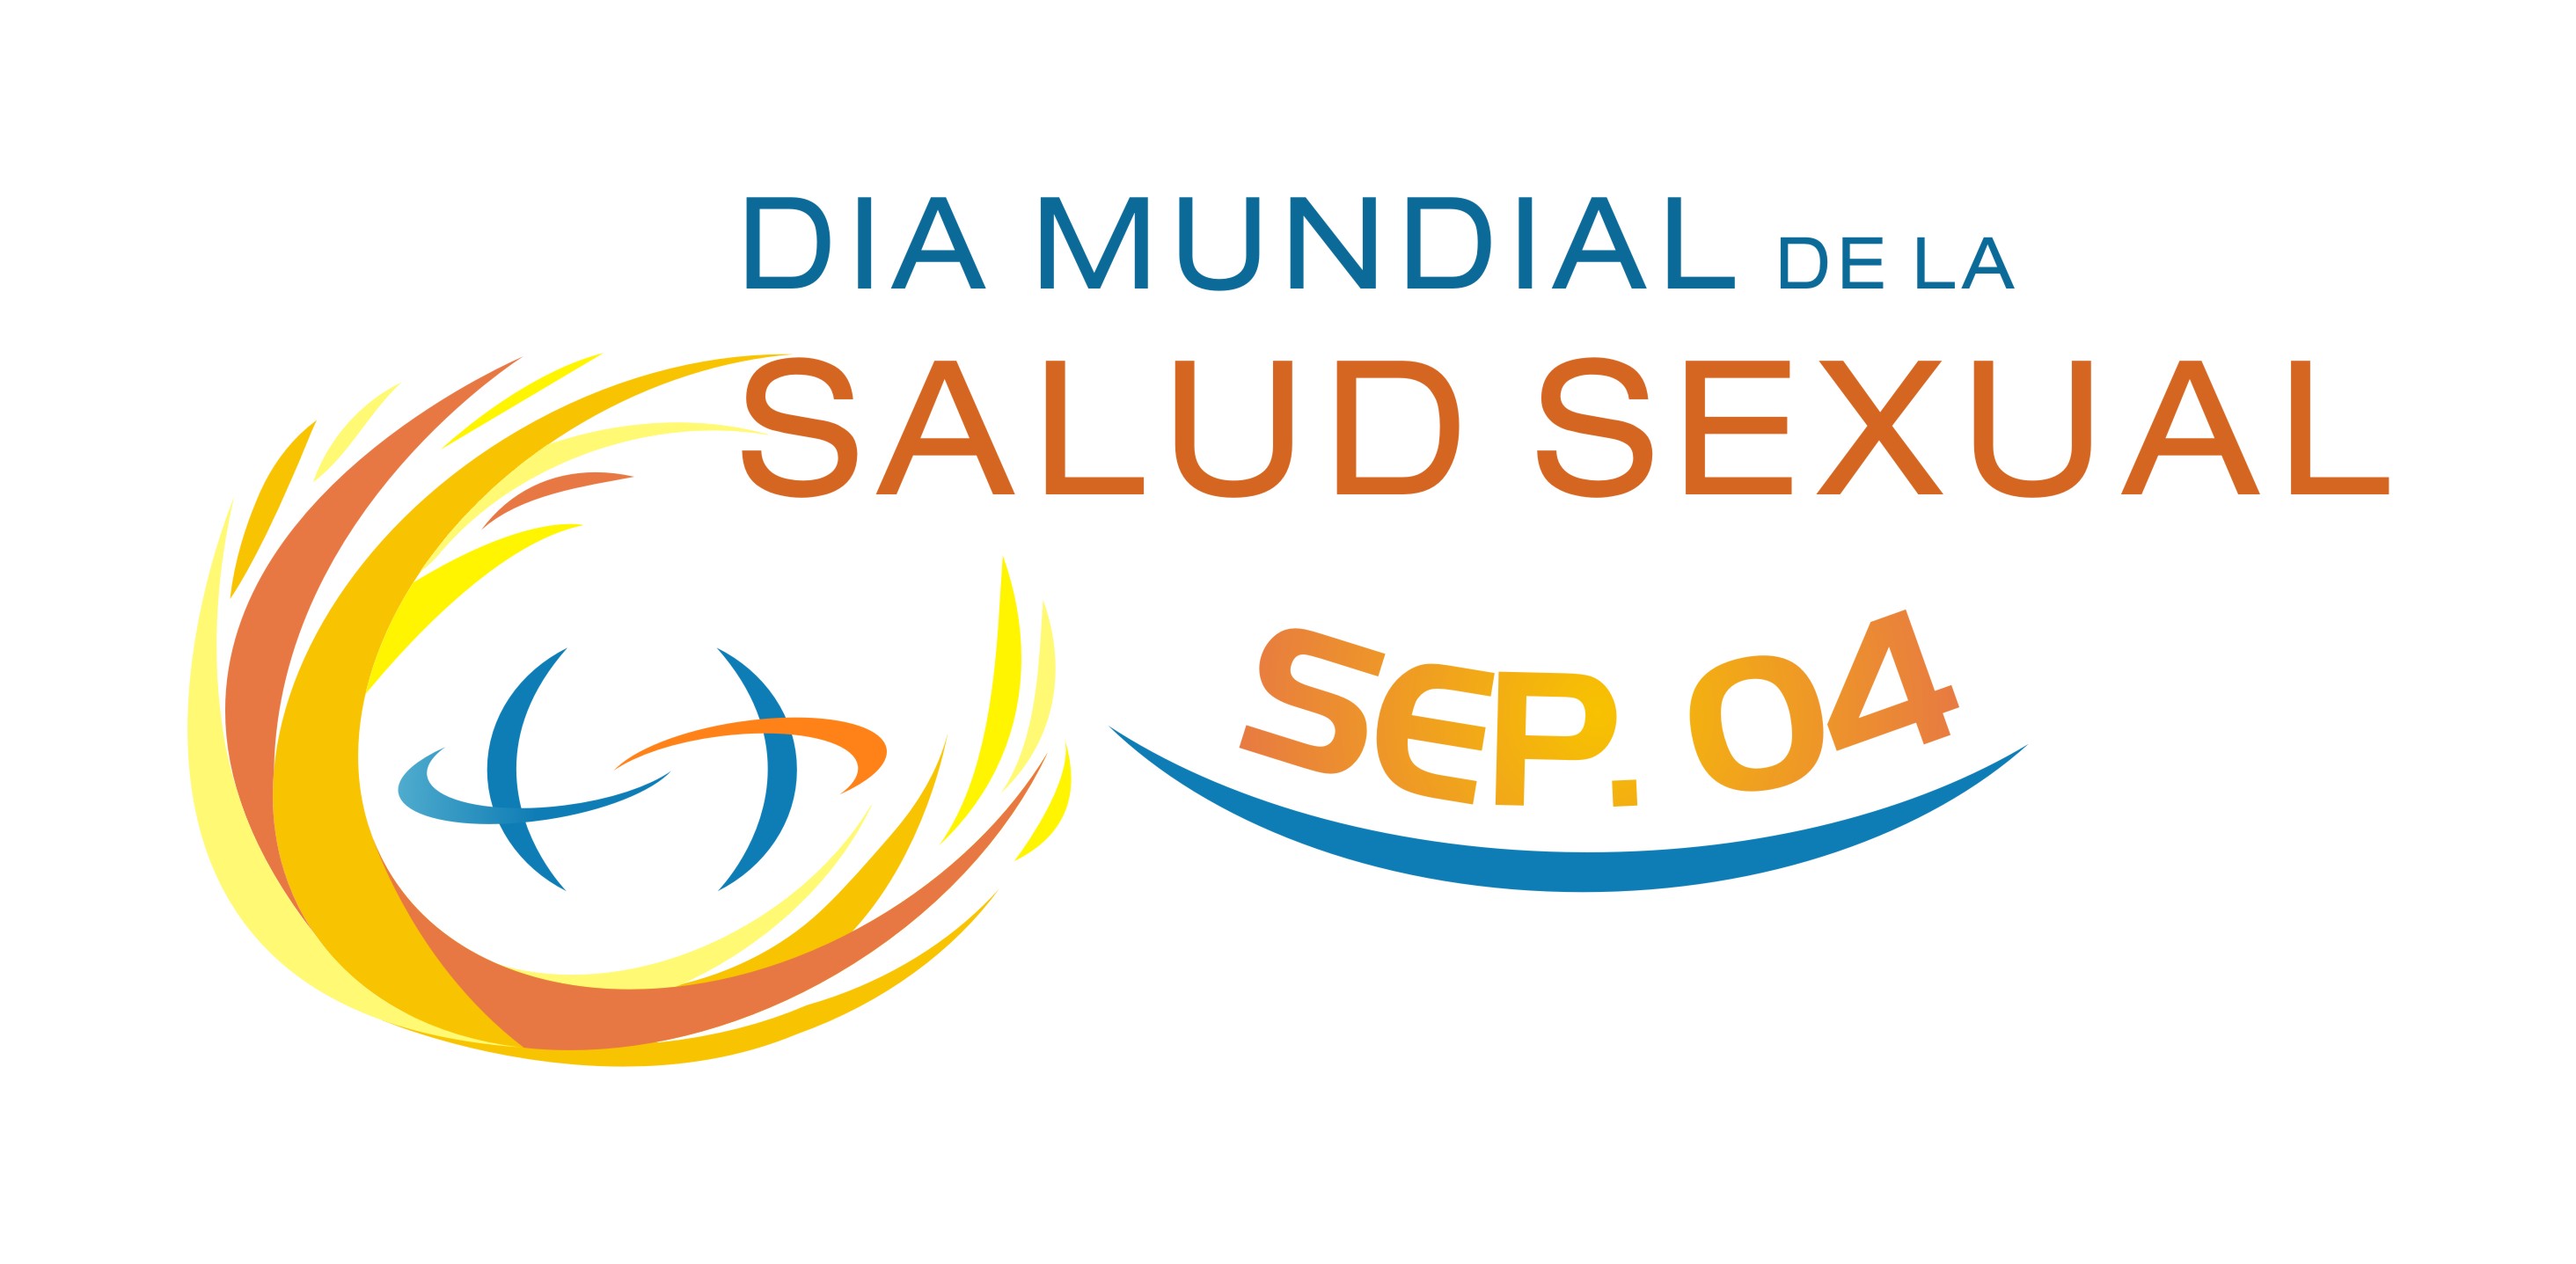 dia mundial de la salud sexual de http://www.diamundialsaludsexual.org/